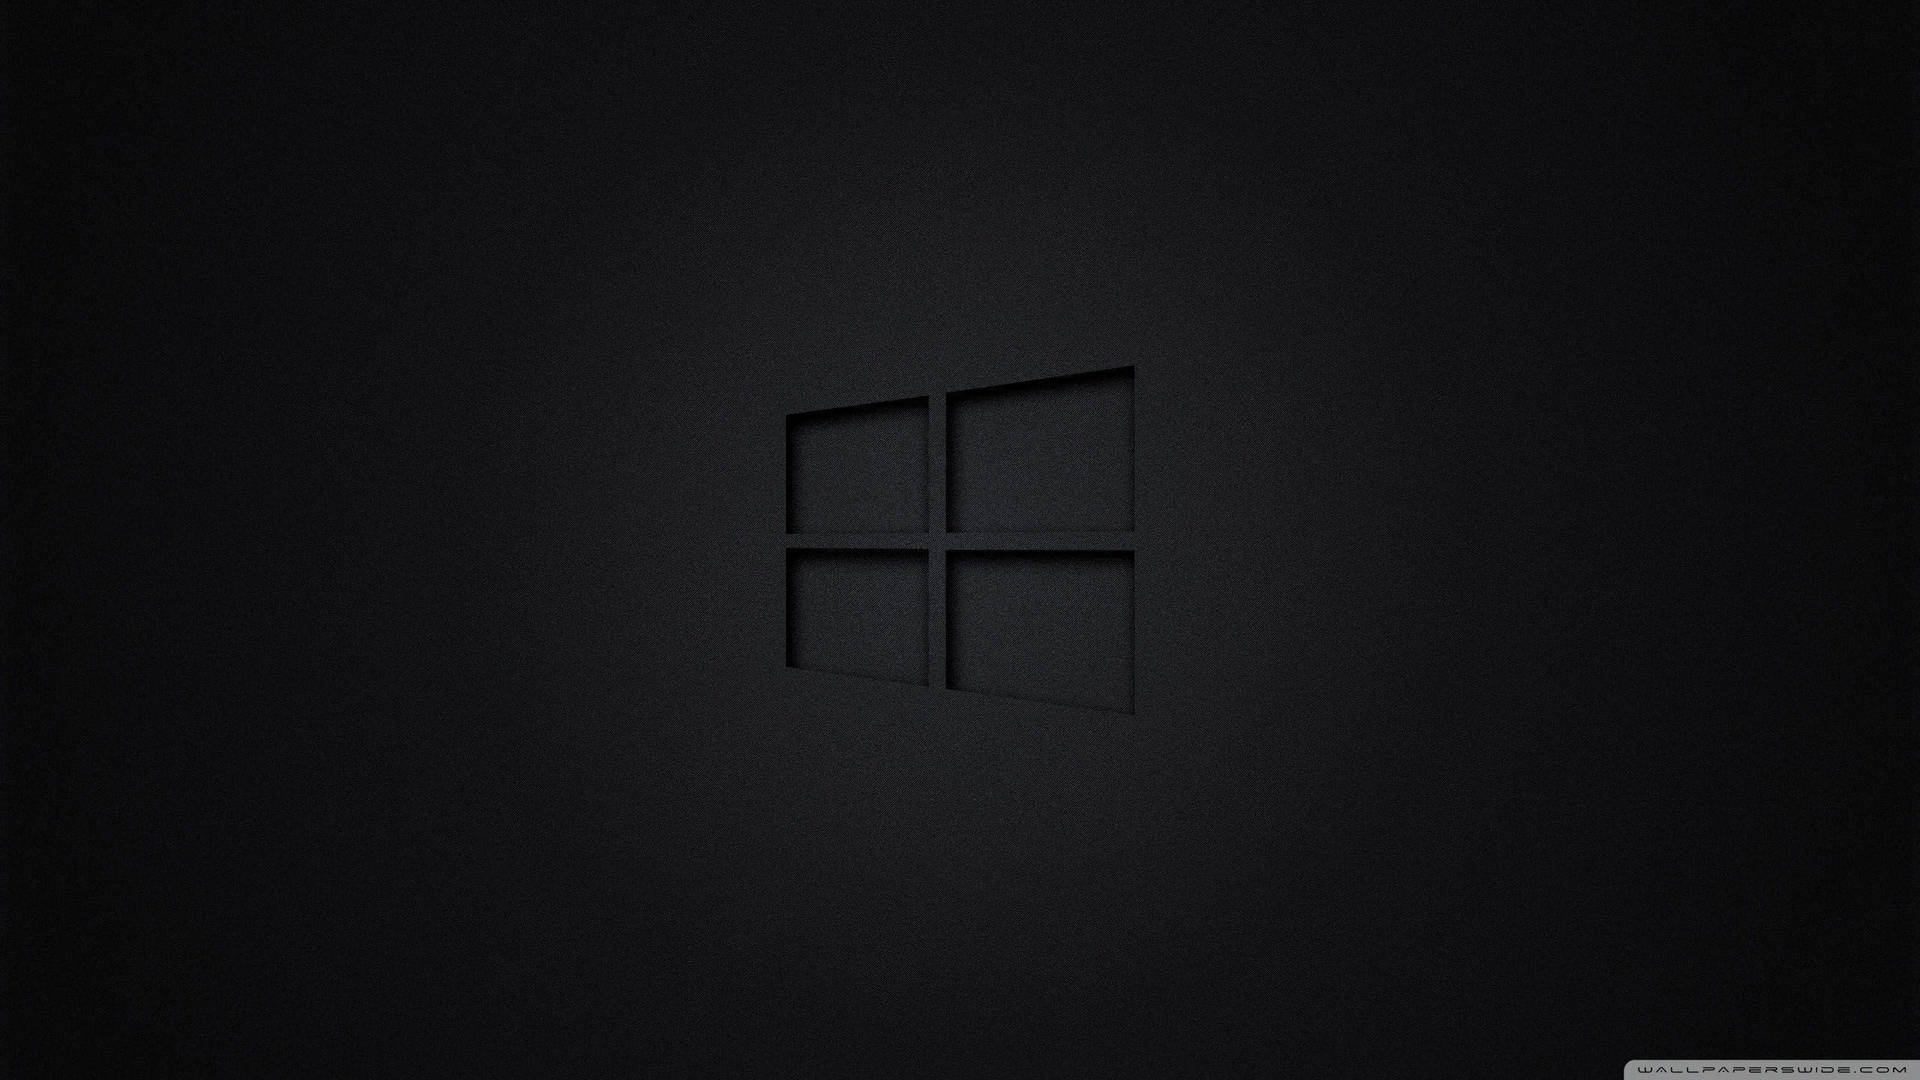 Sort Windows-logo På En Mørk Skærm